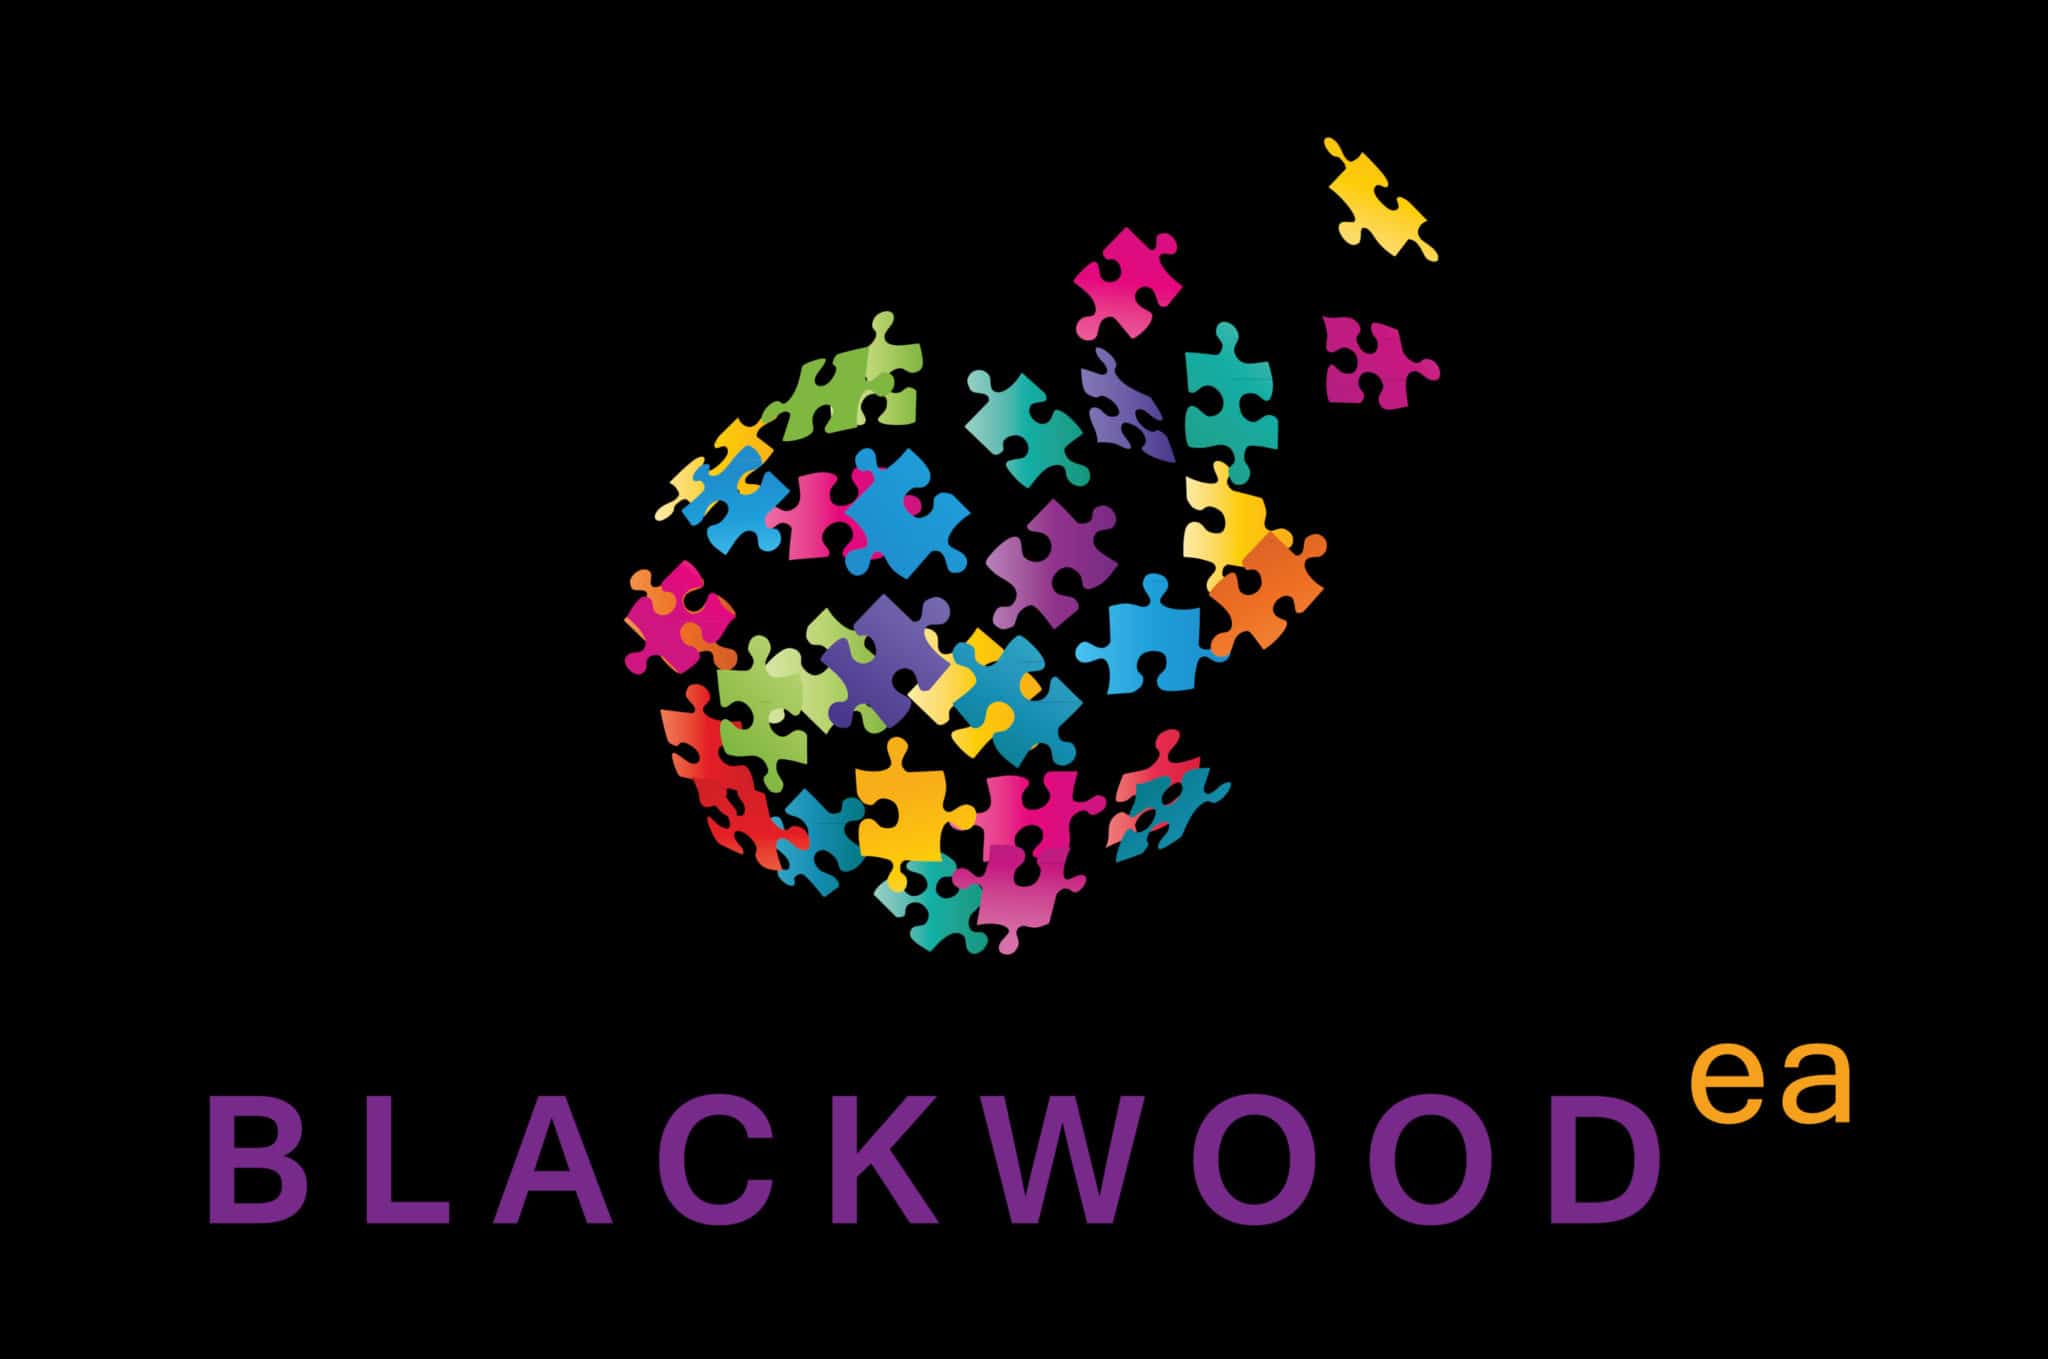 Blackwood EA Logo_Black large